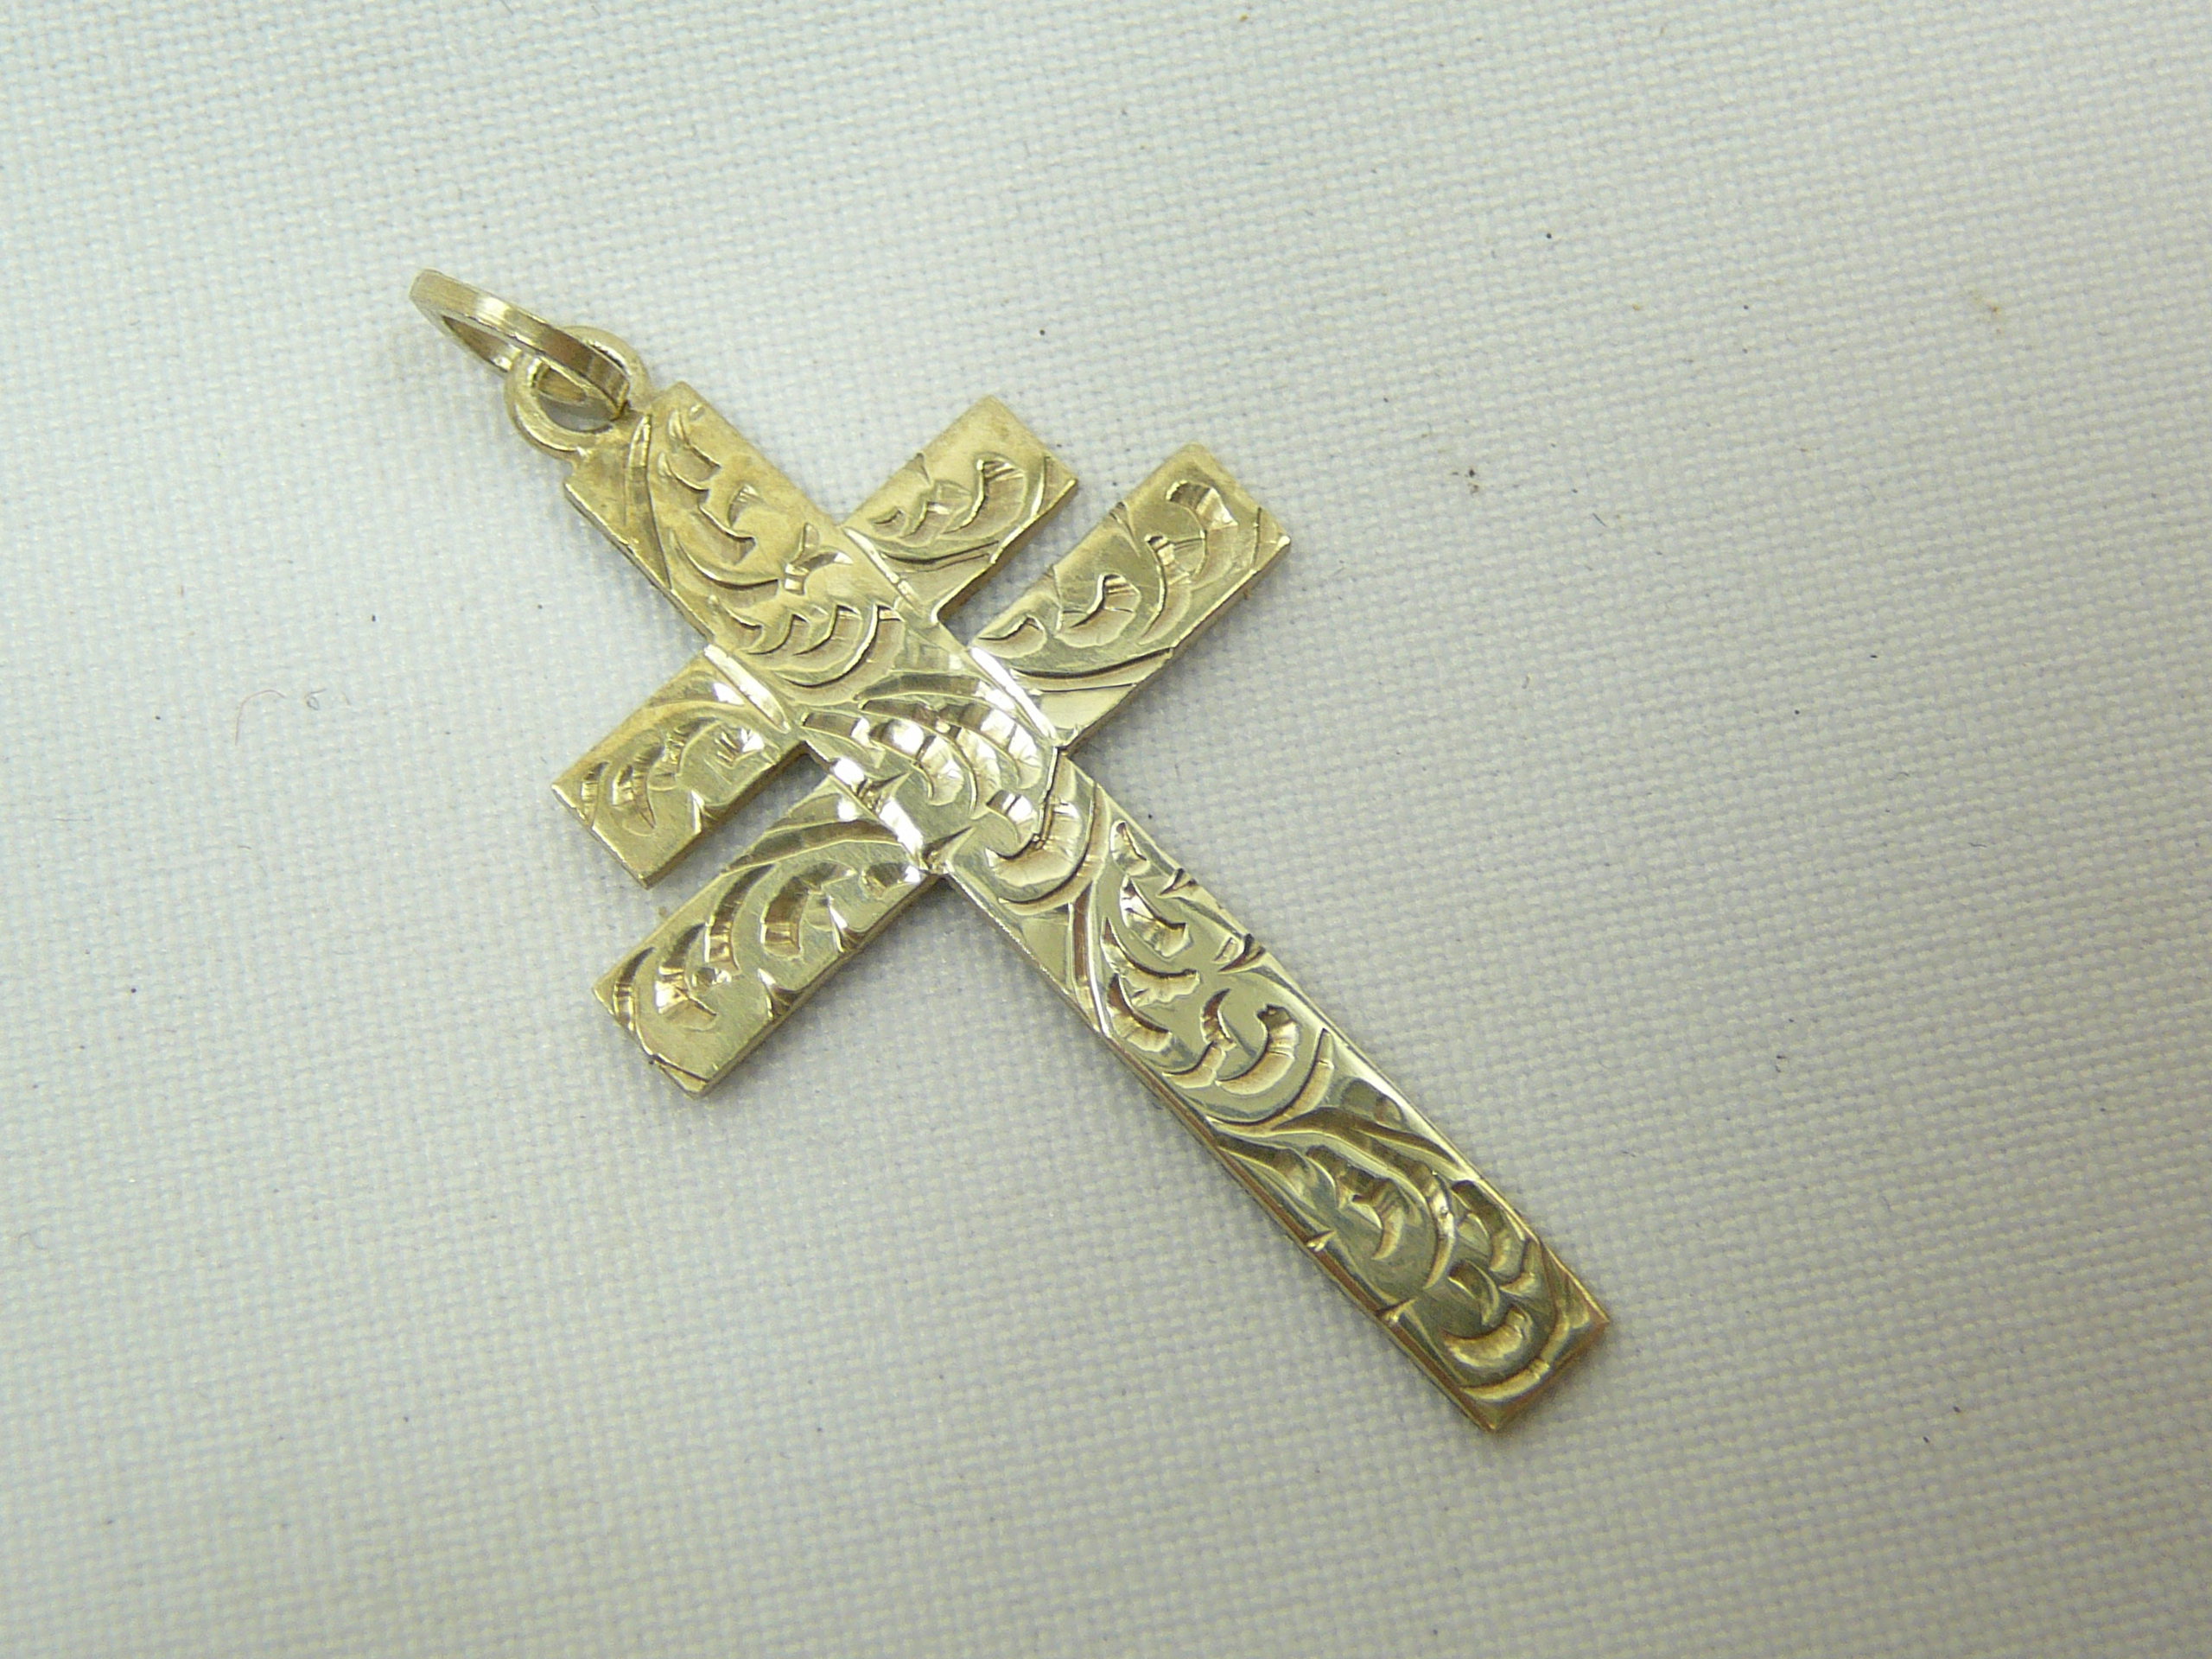 Silver cross pendant - Image 2 of 2